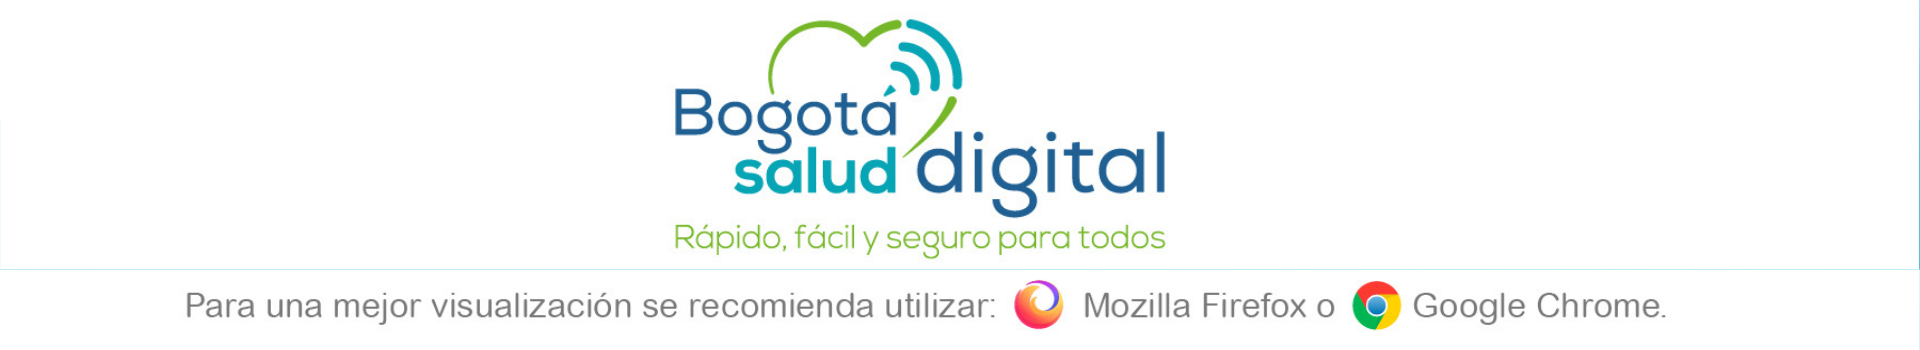 Bogotá Salud Digital